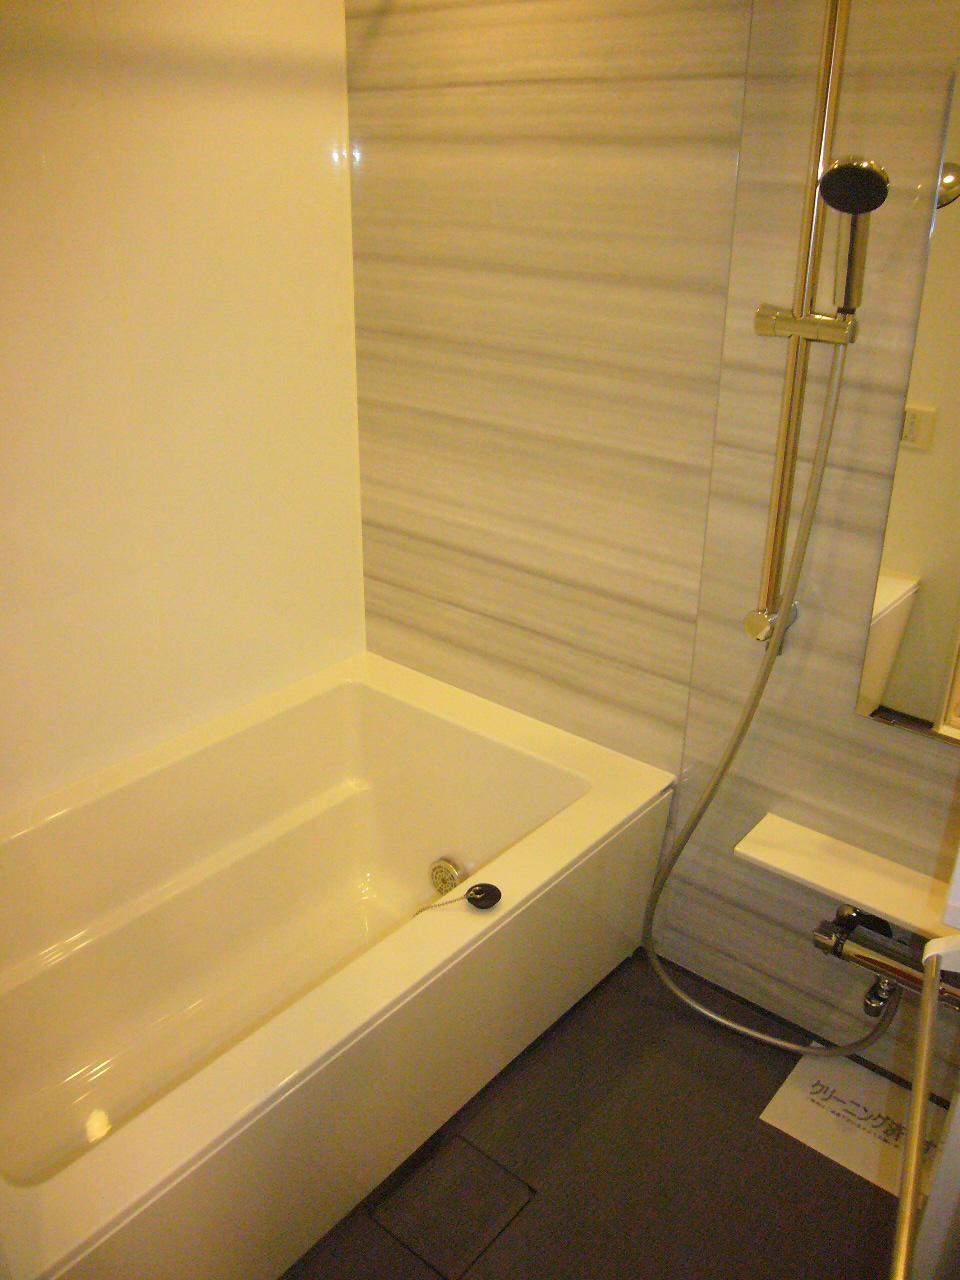 Bathroom. 1317 size Panasonic With ventilation drying heater